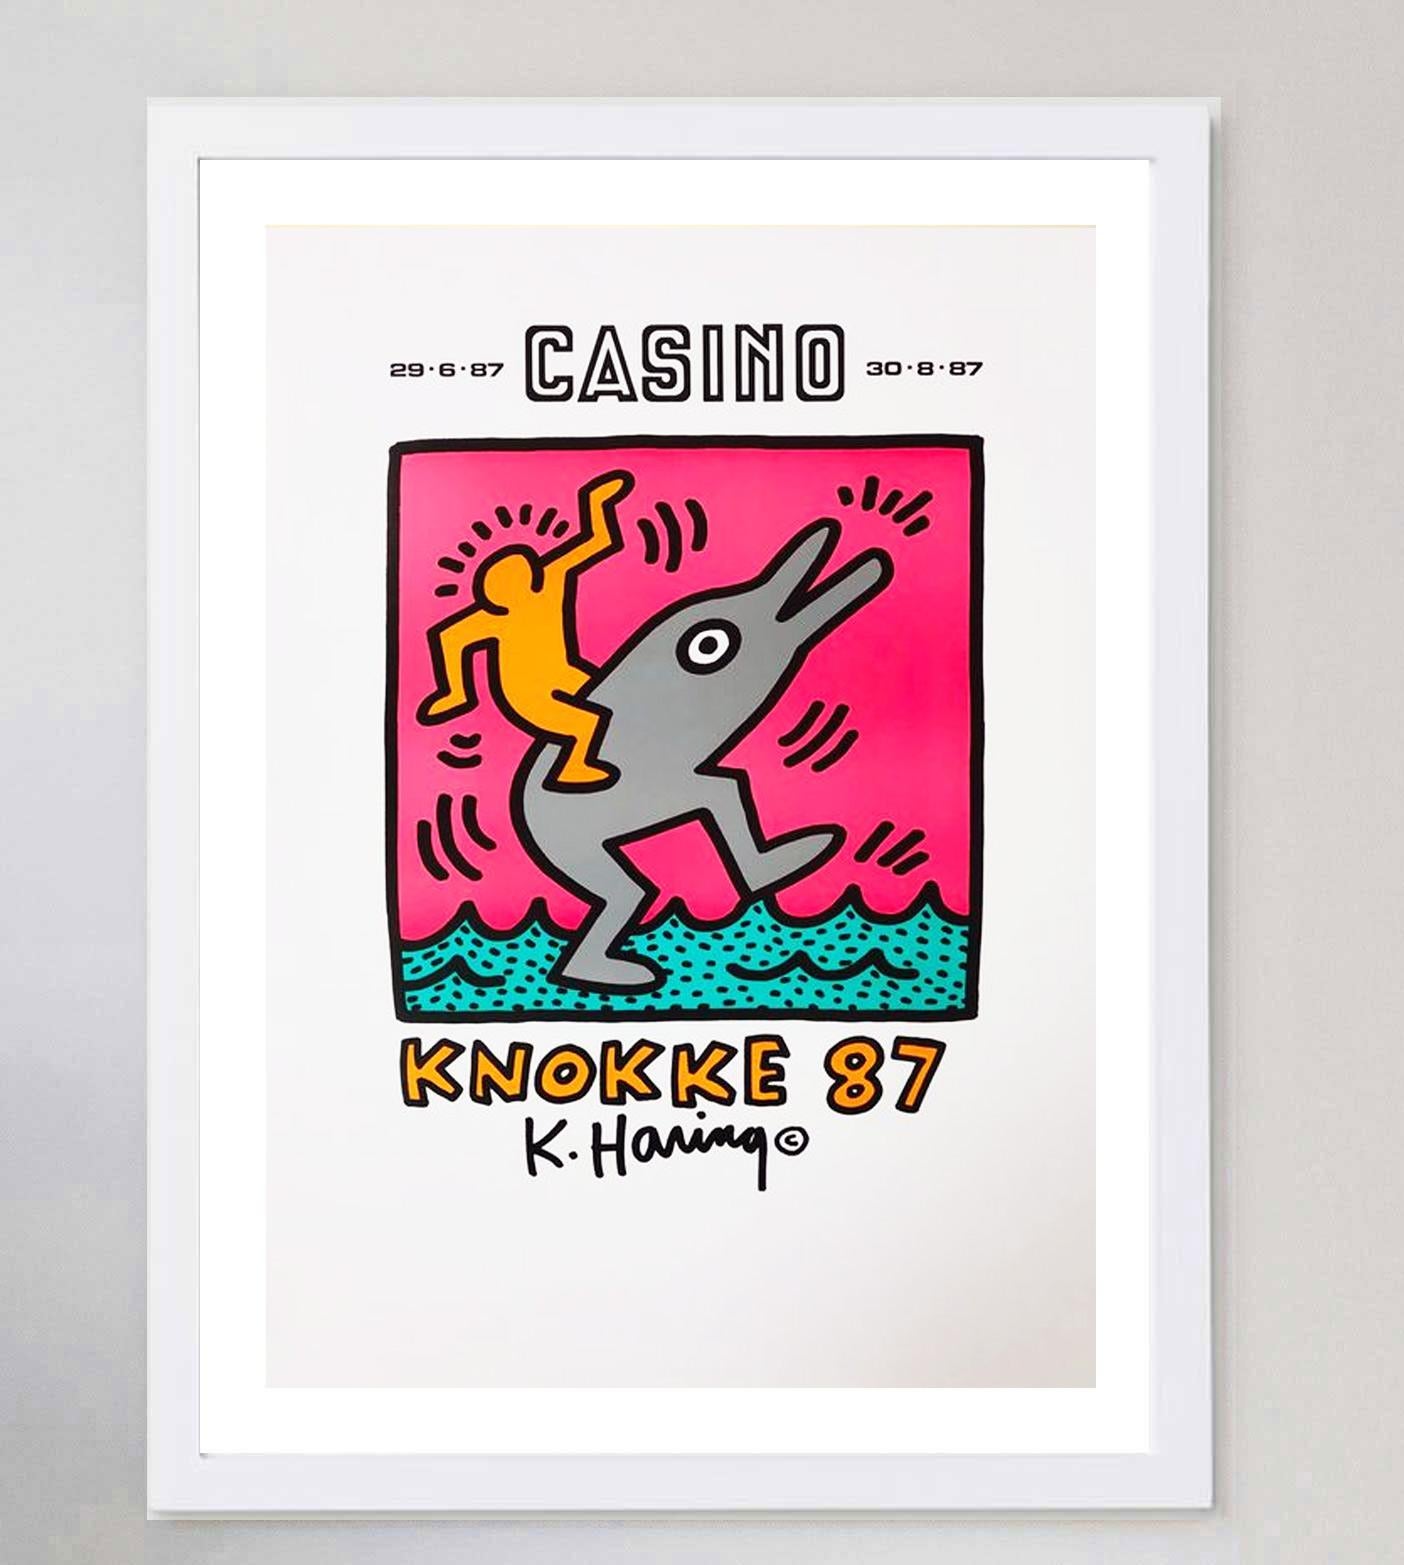 1987 Keith Haring, Casino Knokke, Original-Vintage-Poster (amerikanisch) im Angebot